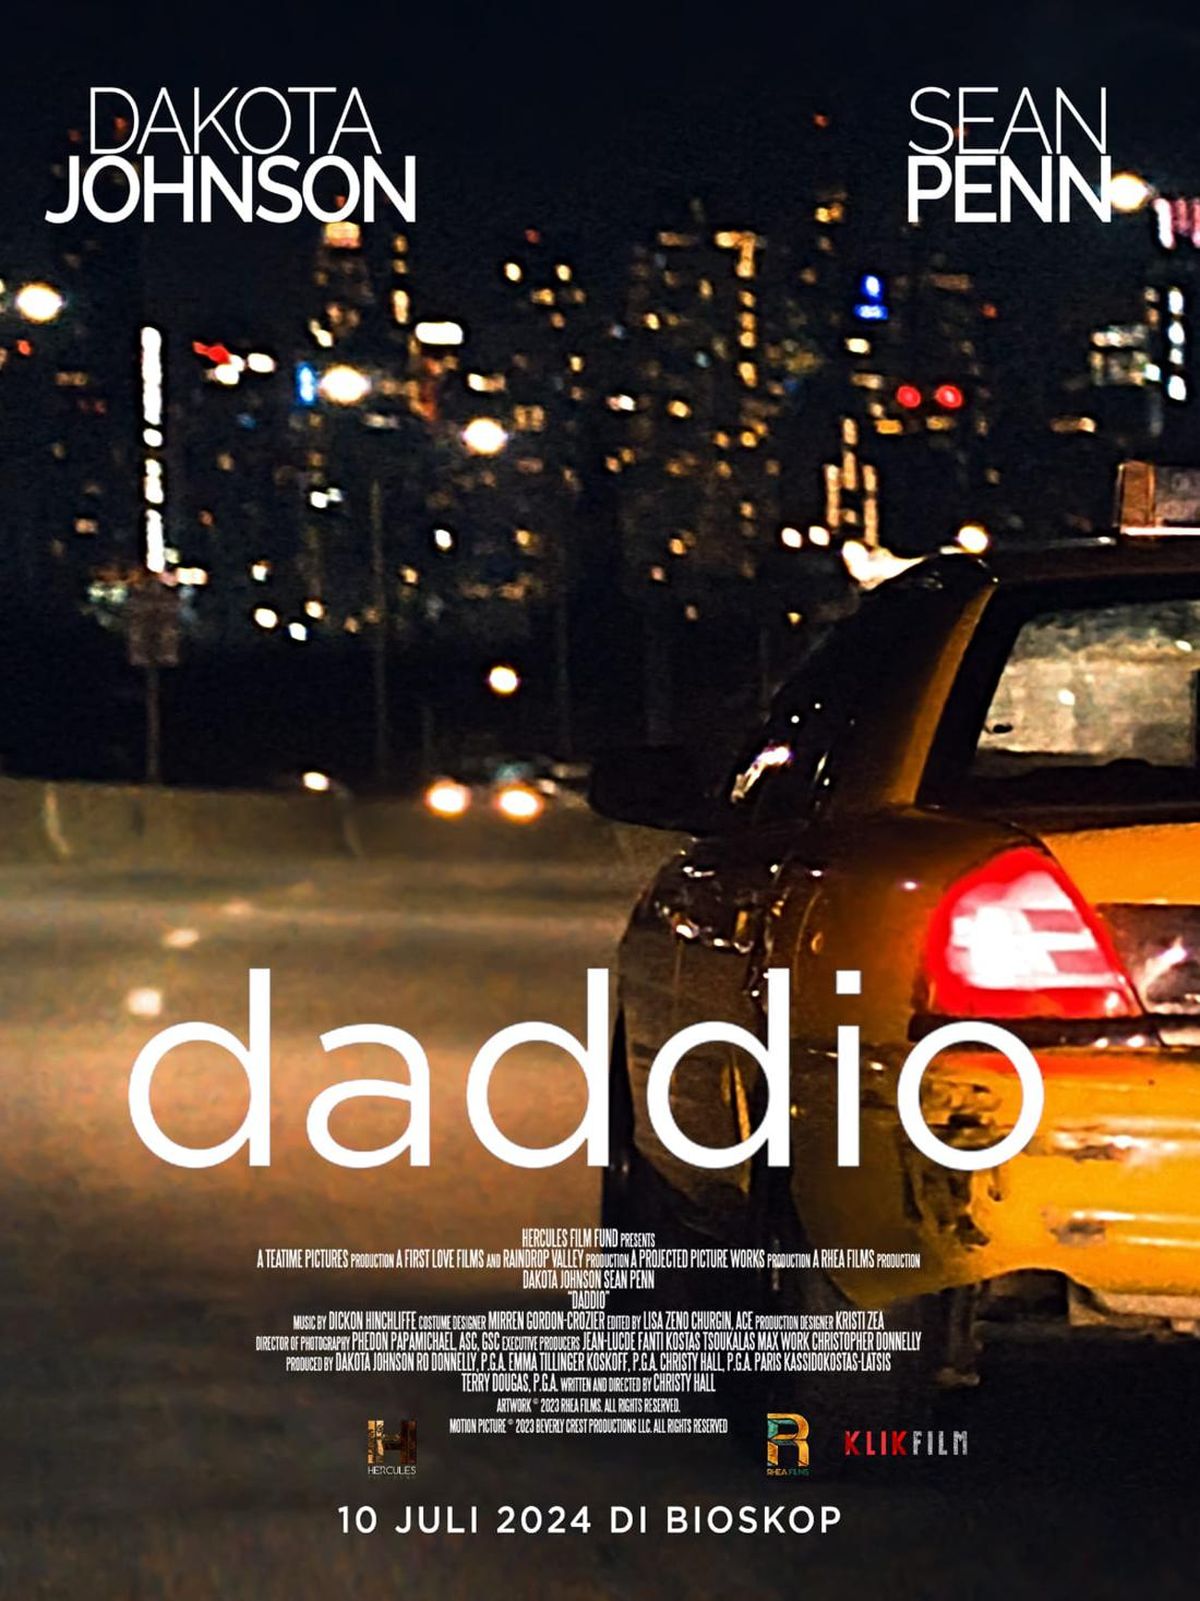 Sinopsis Film Daddio, Dibintangi Sean Penn dan Dakota Johnson Tayang Mulai 10 Juli 2024